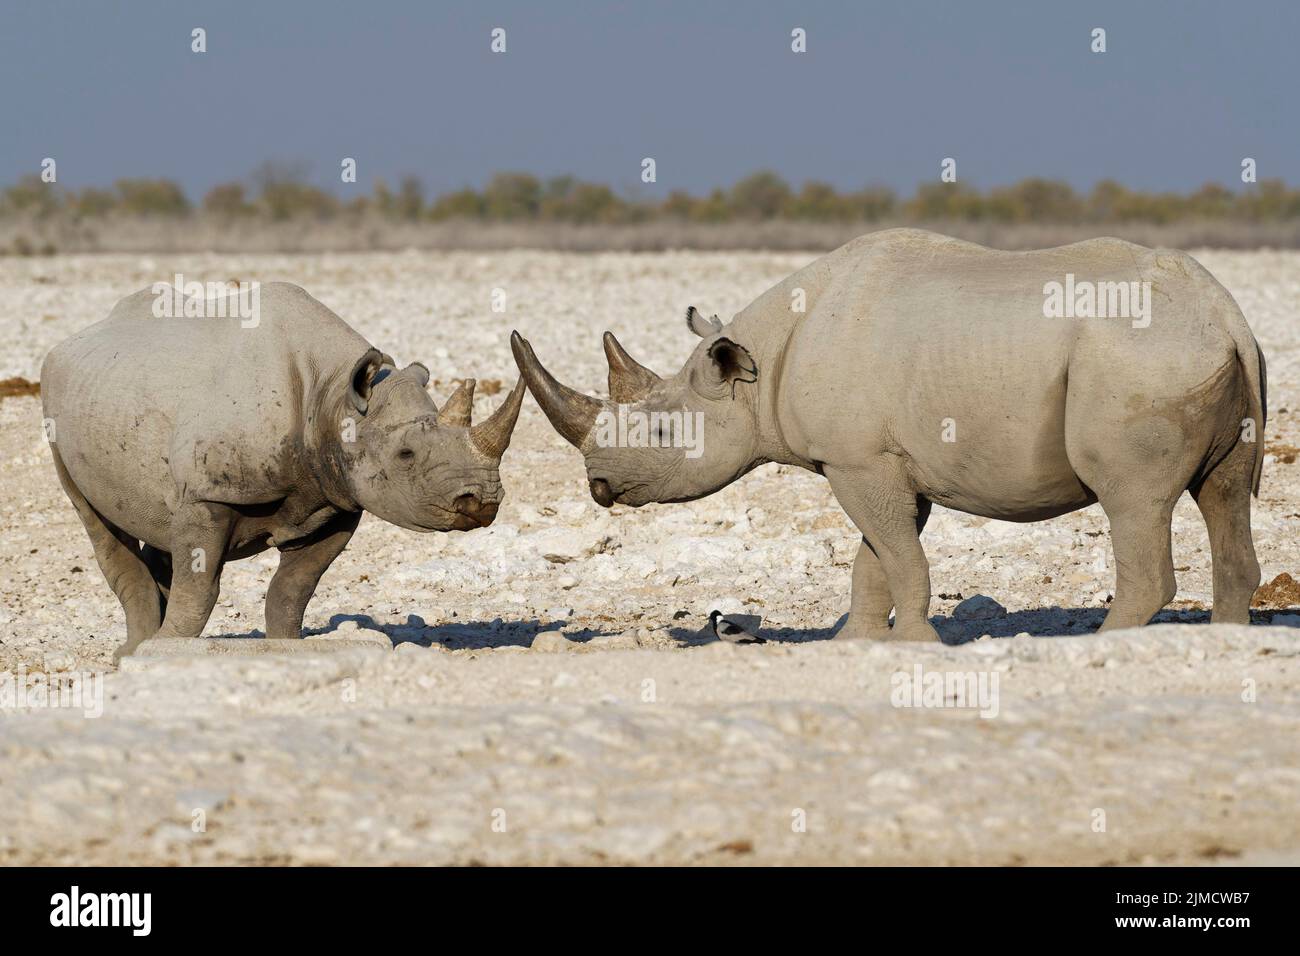 Black rhinoceroses (Diceros bicornis), two adults standing face to face at waterhole, Etosha National Park, Namibia, Africa Stock Photo